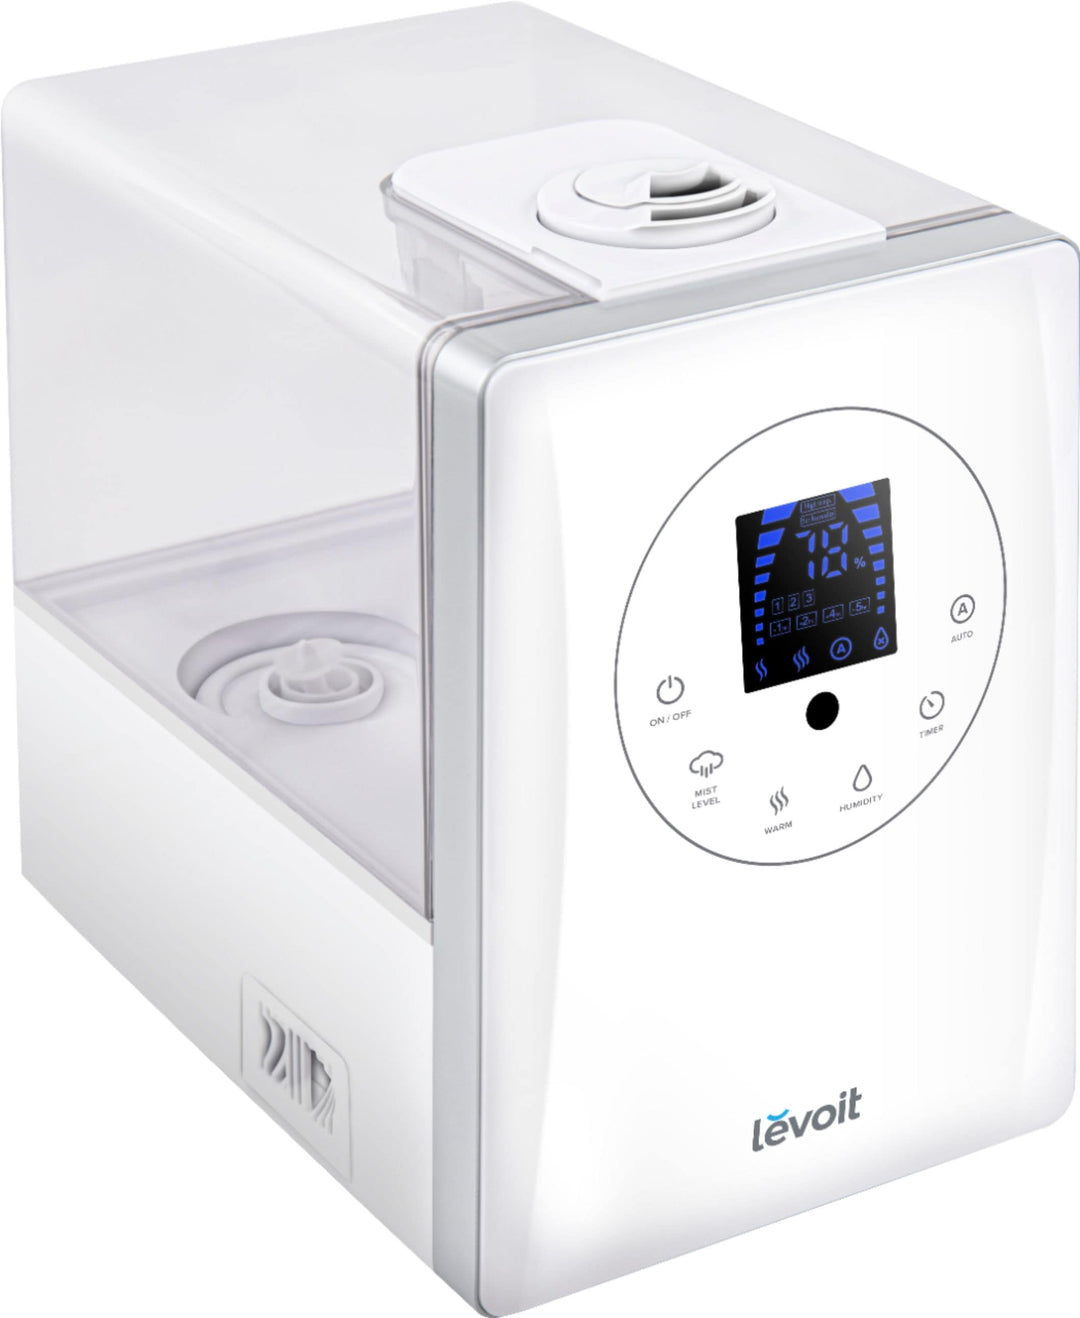 Levoit - Aerapy Hybrid 1.6 Gal Ultrasonic Humidifier - White_2